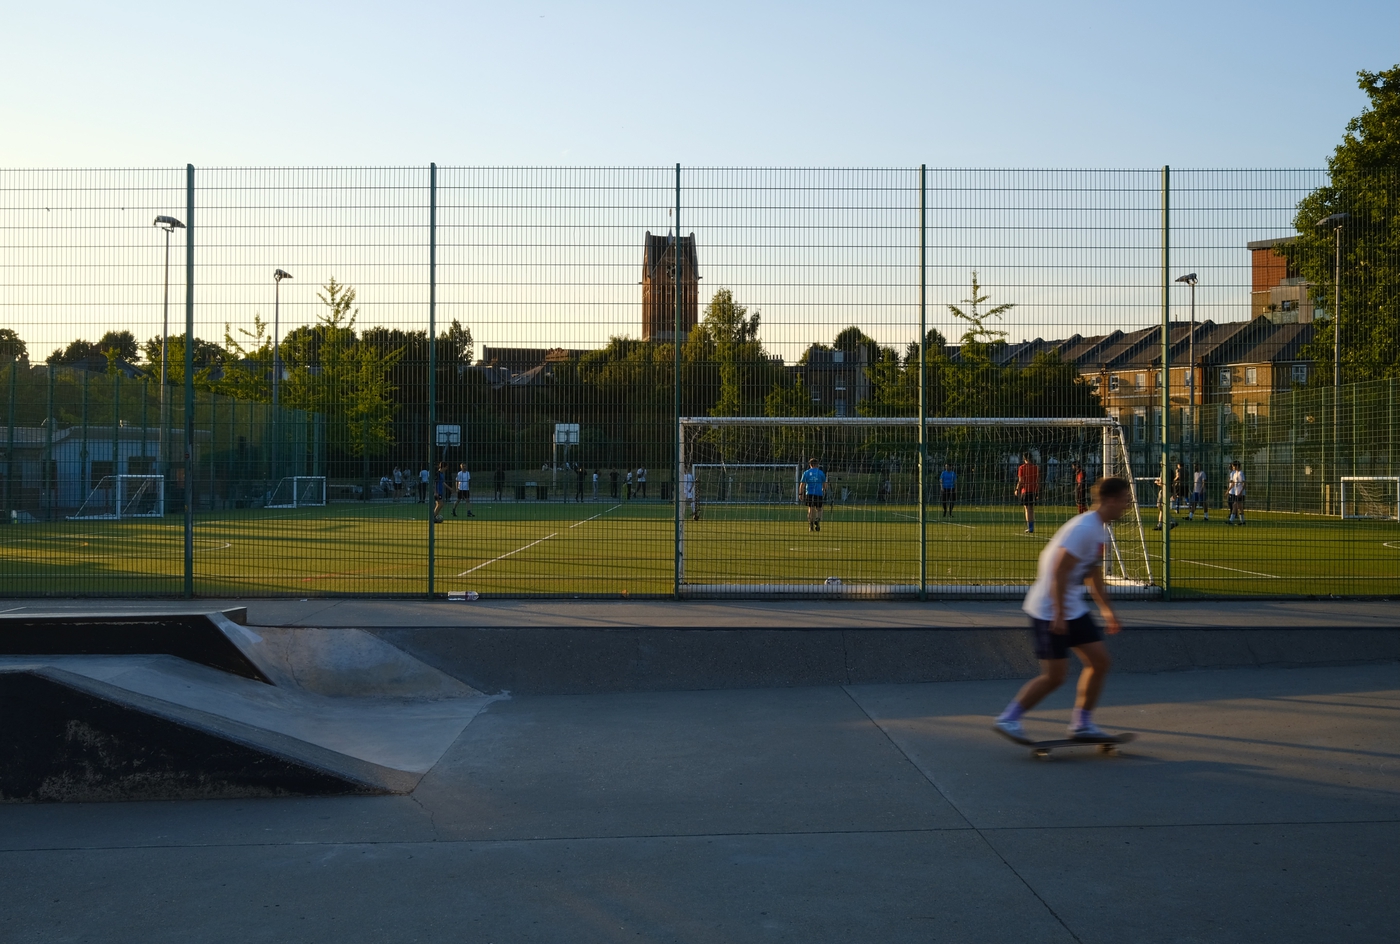 A skatepark at sunset